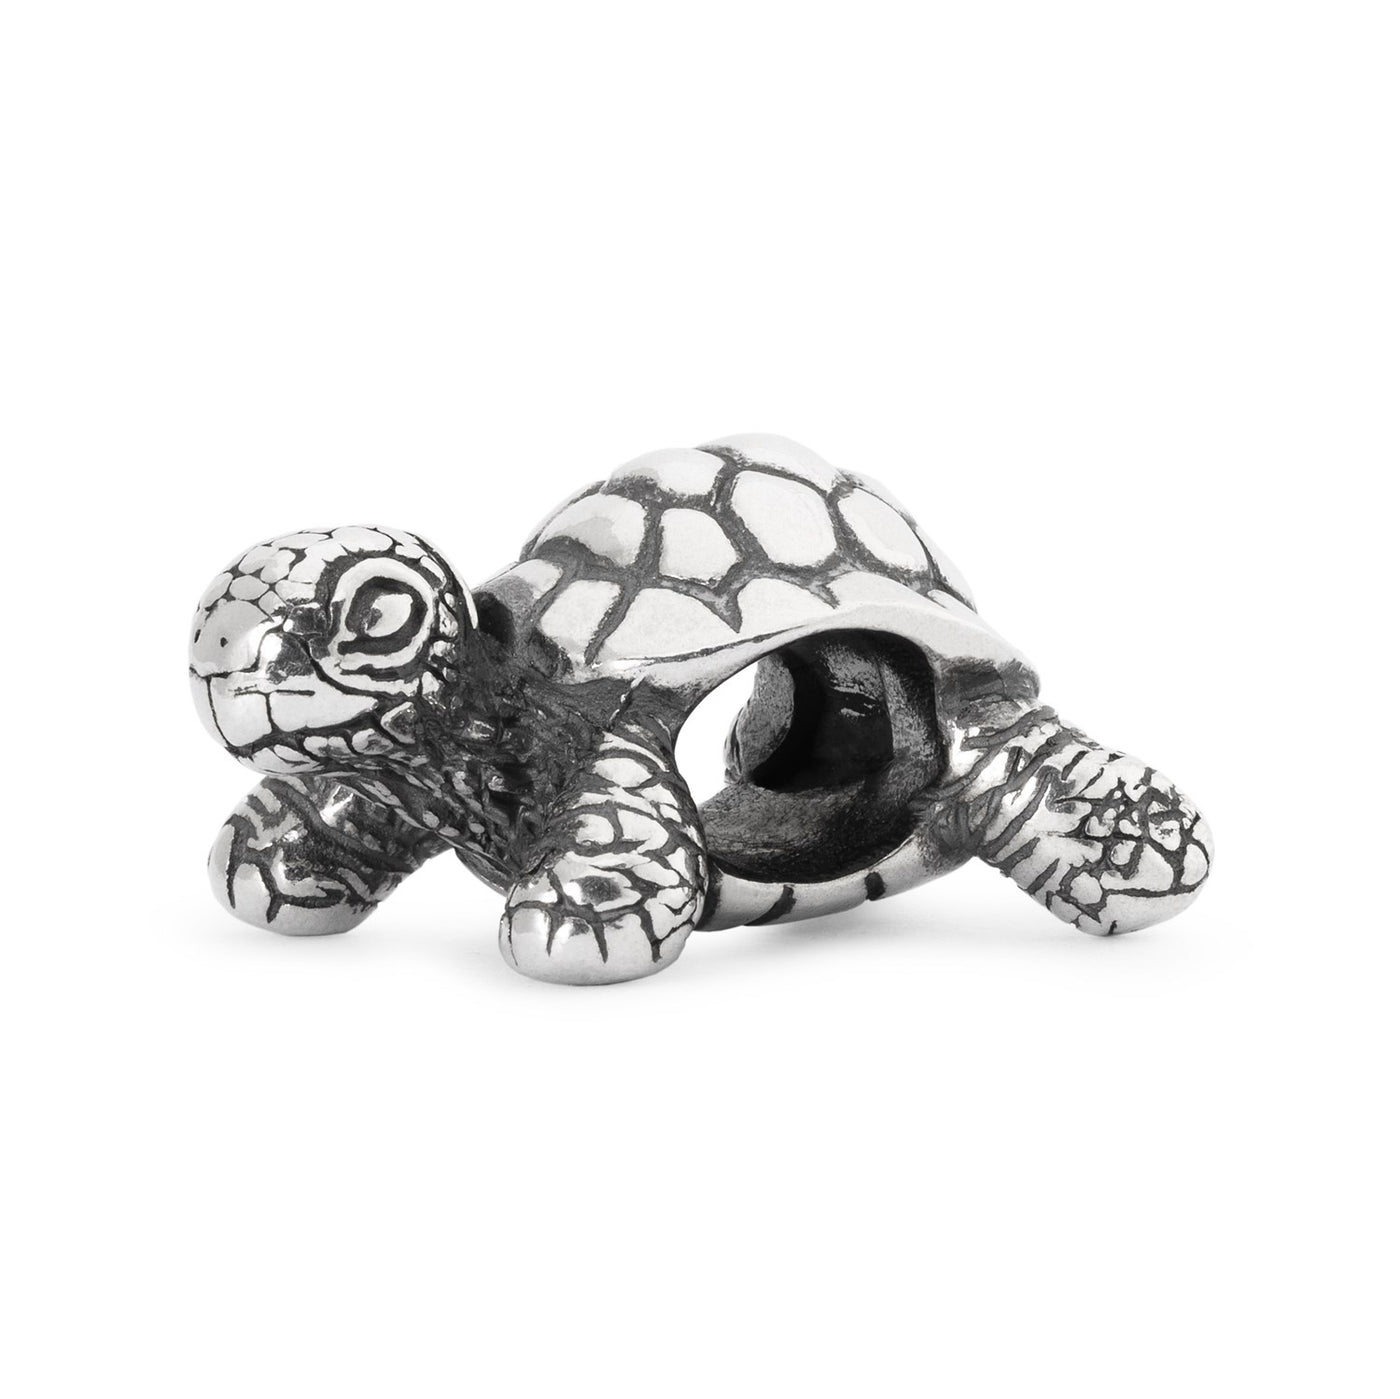 African tortoise jewellery bead in silver.